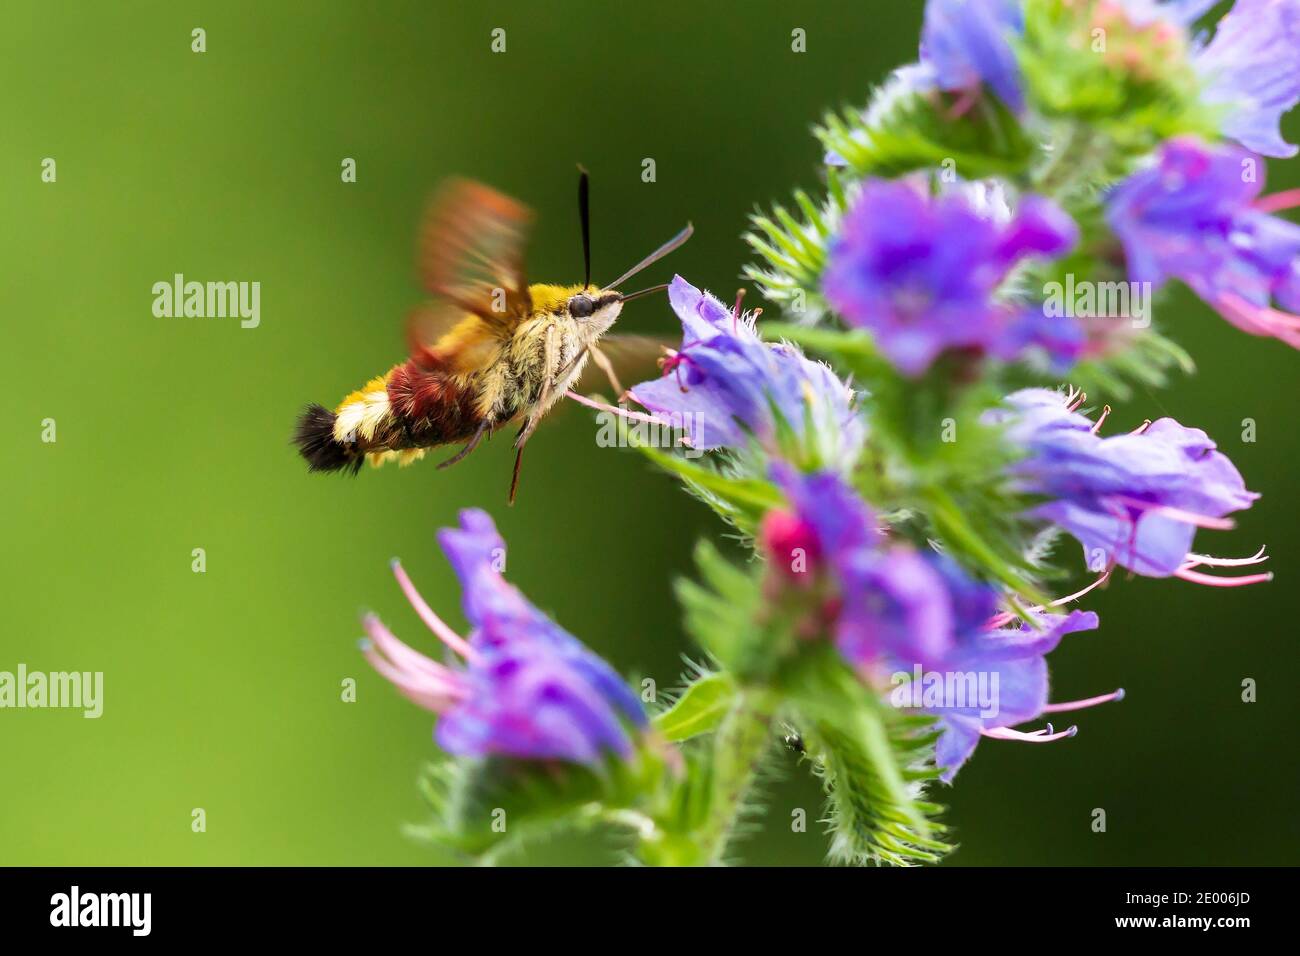 Closeup of a Hemaris fuciformis, the broad-bordered bee hawk-moth in flight, feeding nectar on the purple flowers of Echium vulgare viper's bugloss an Stock Photo